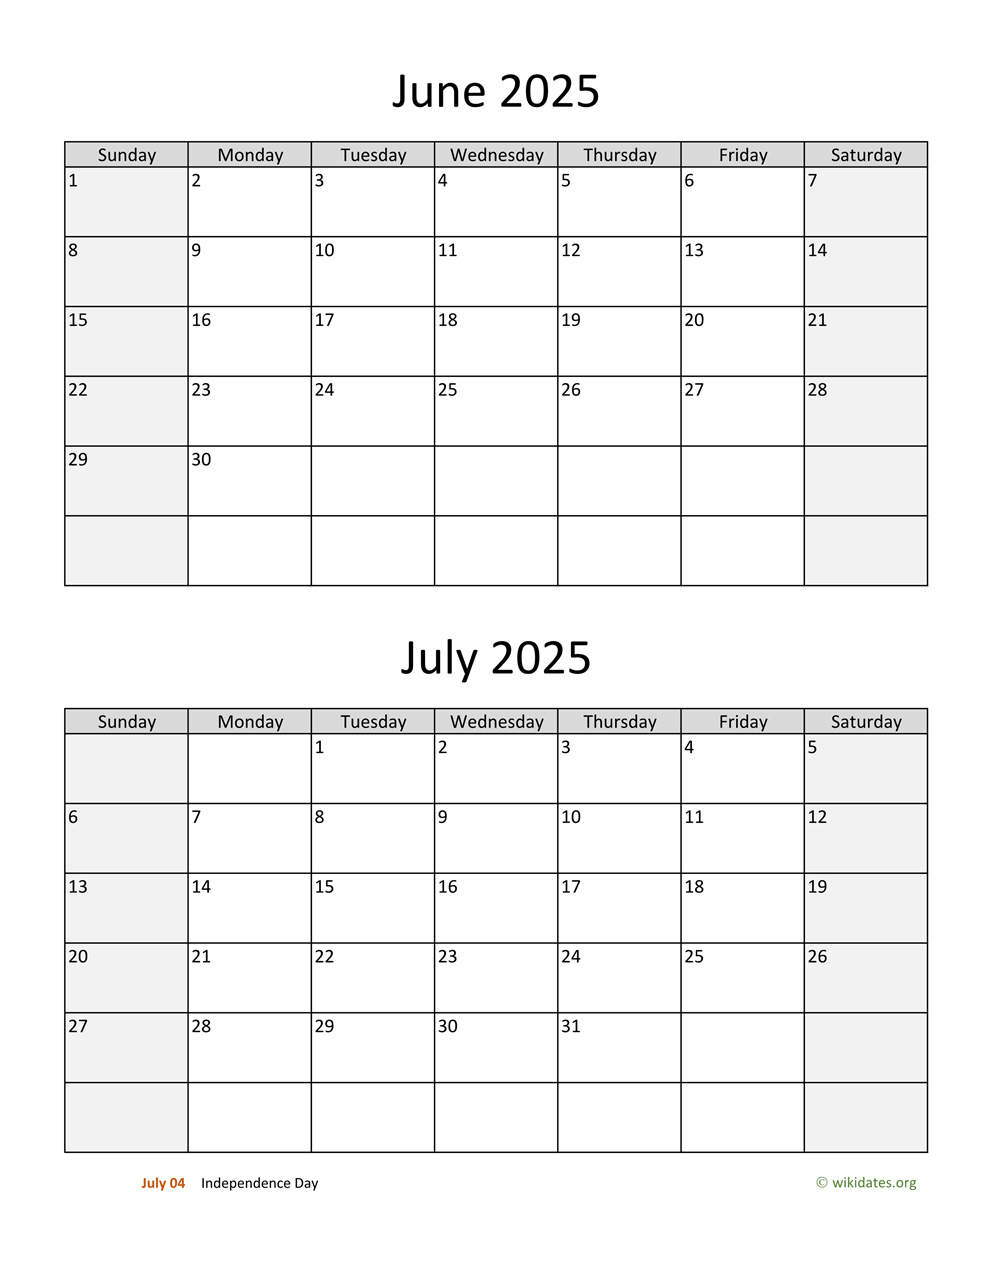 june-and-july-2025-calendar-wikidates